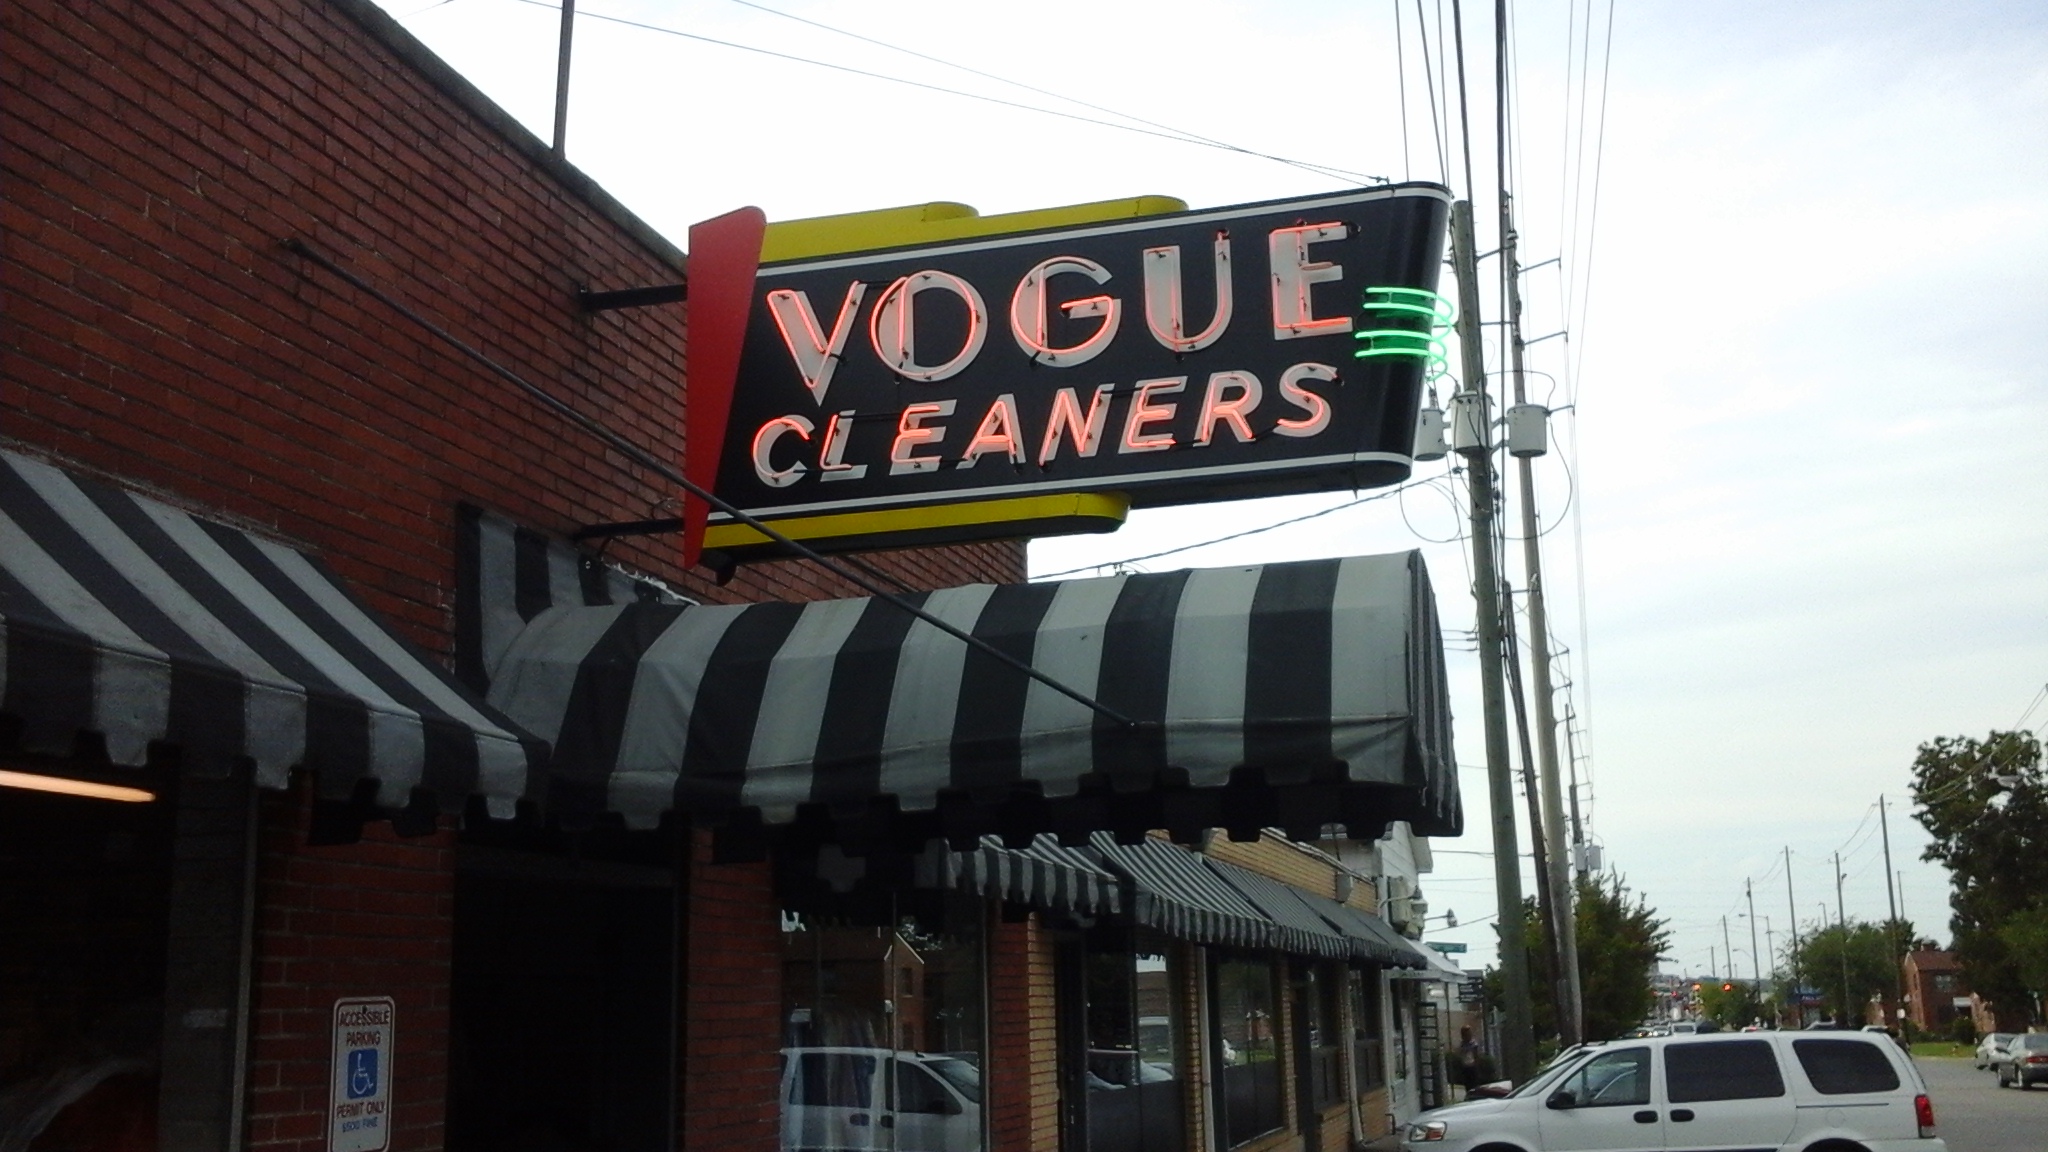 Vogue Cleaners  Birmingham  Alabama  AL  LocalDatabase com